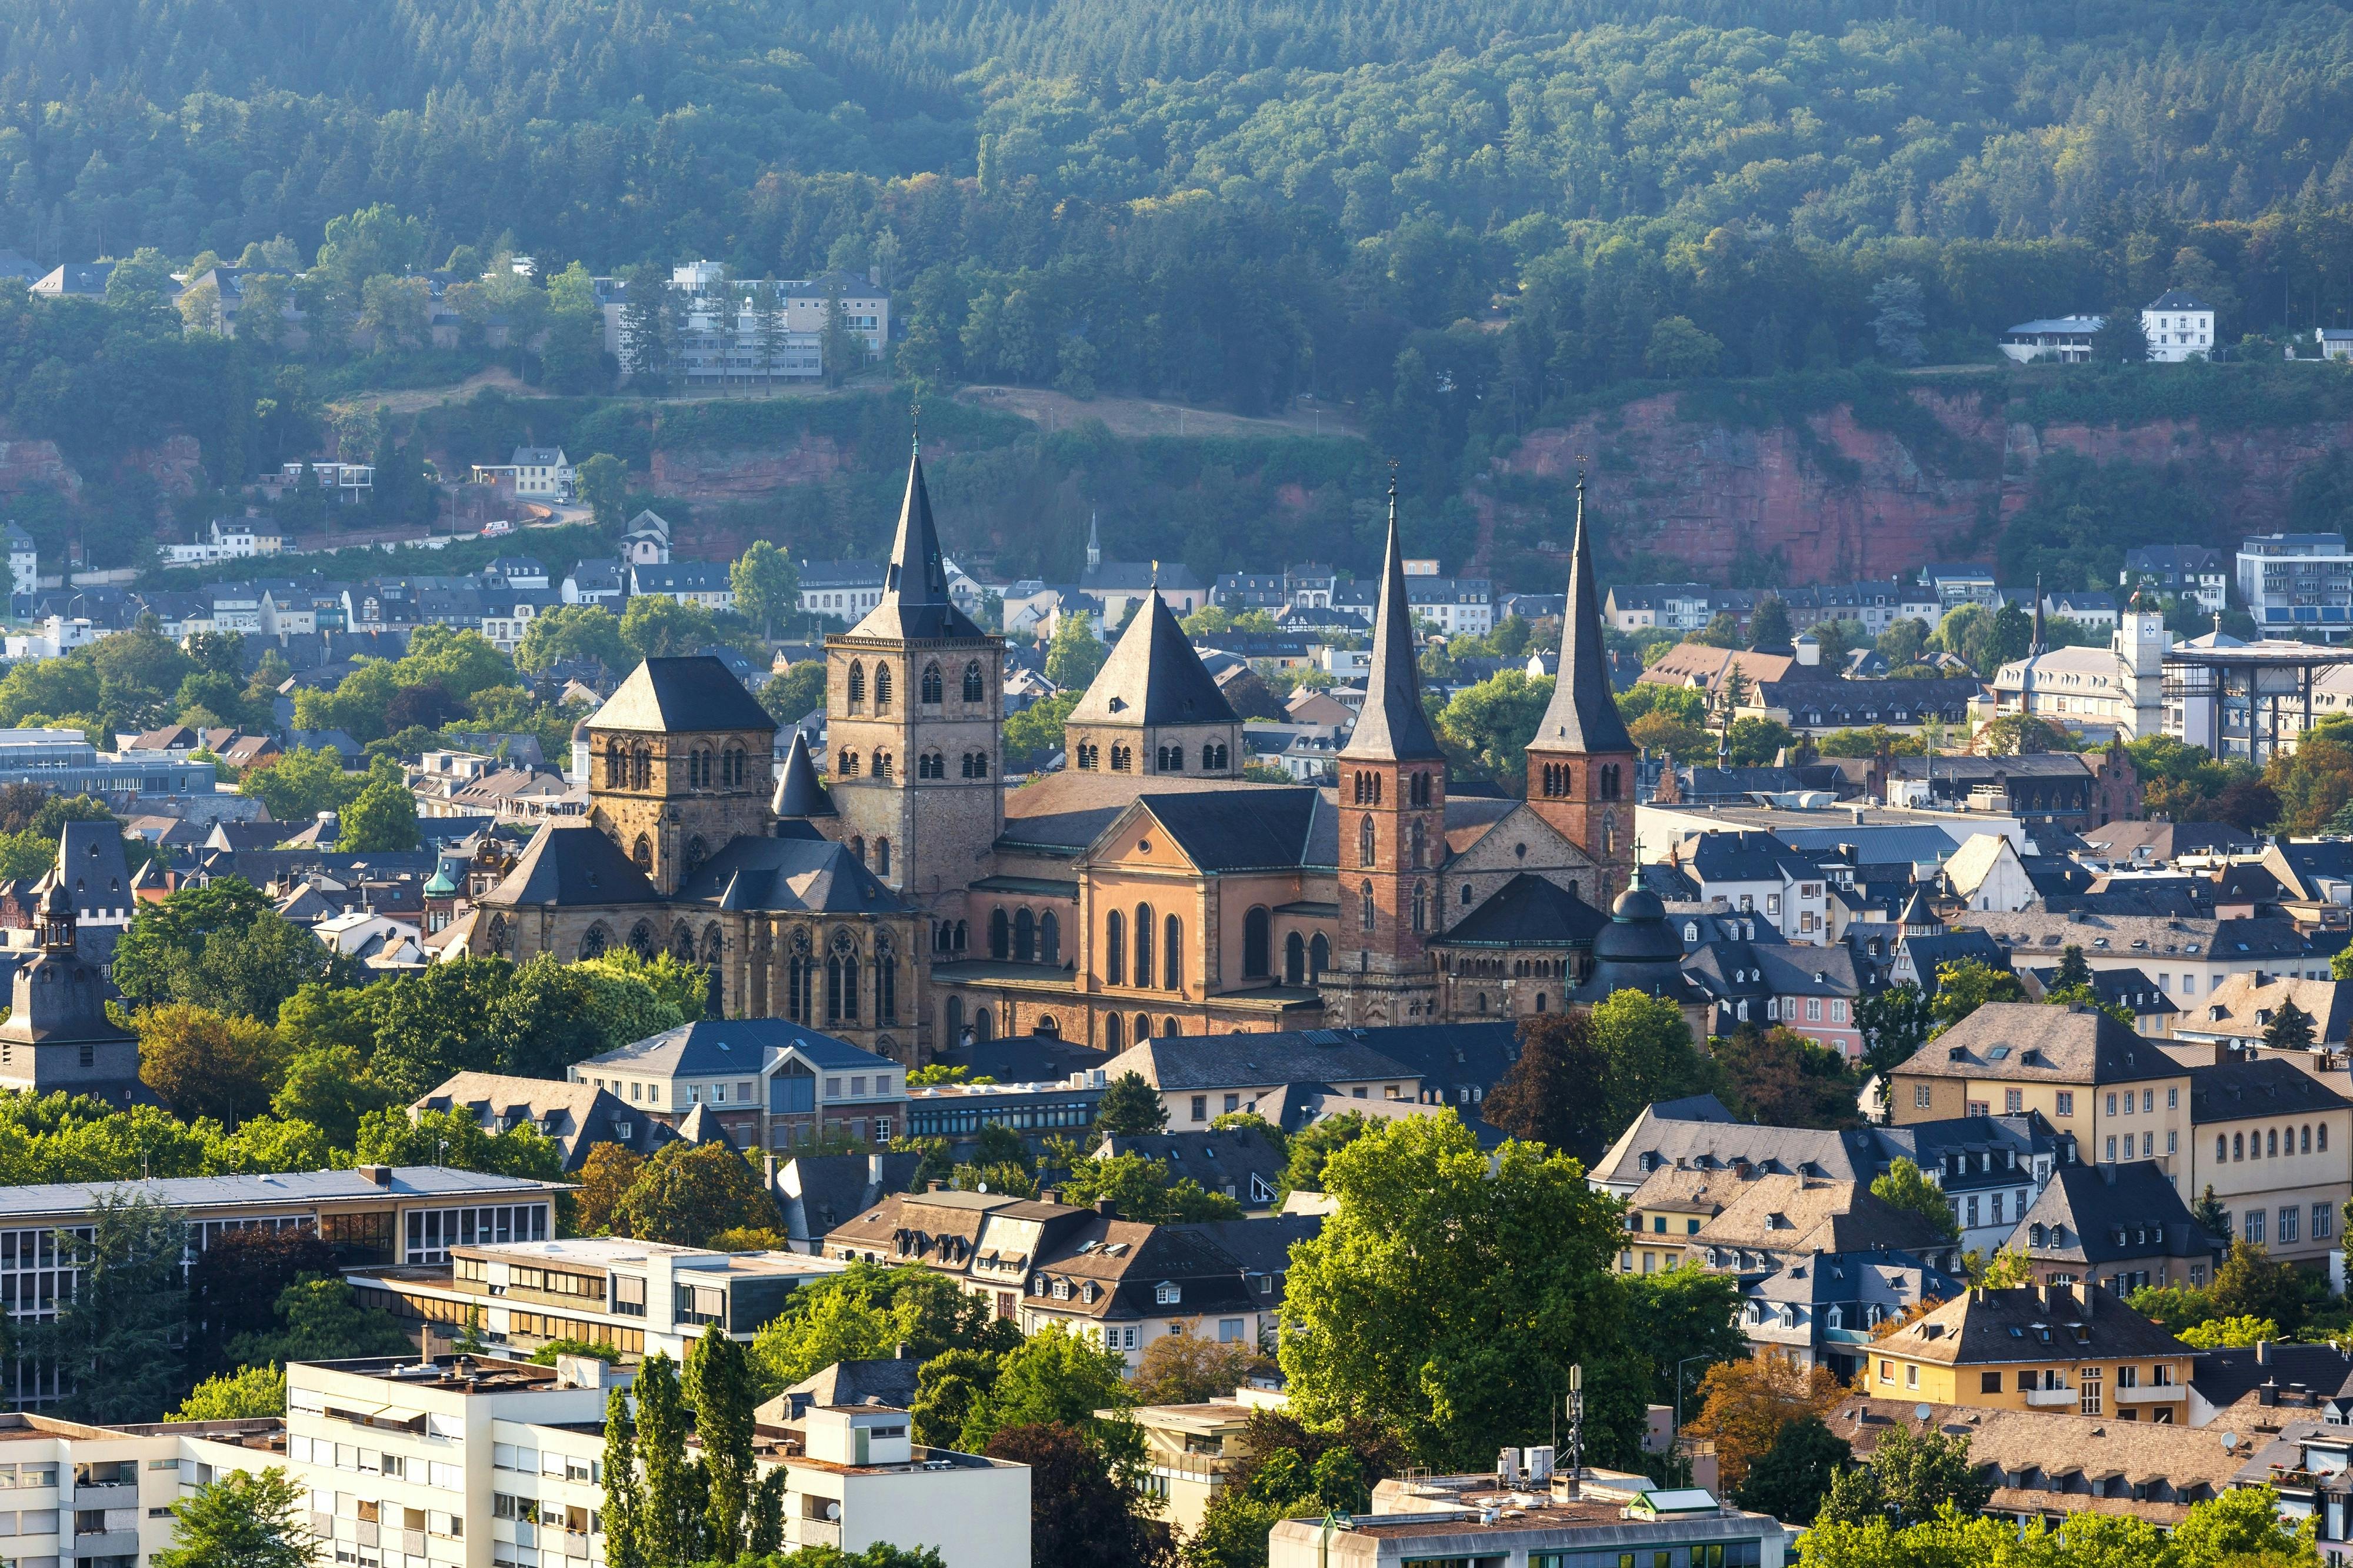 Escape Tour zelfgeleide, interactieve stadsuitdaging in Trier